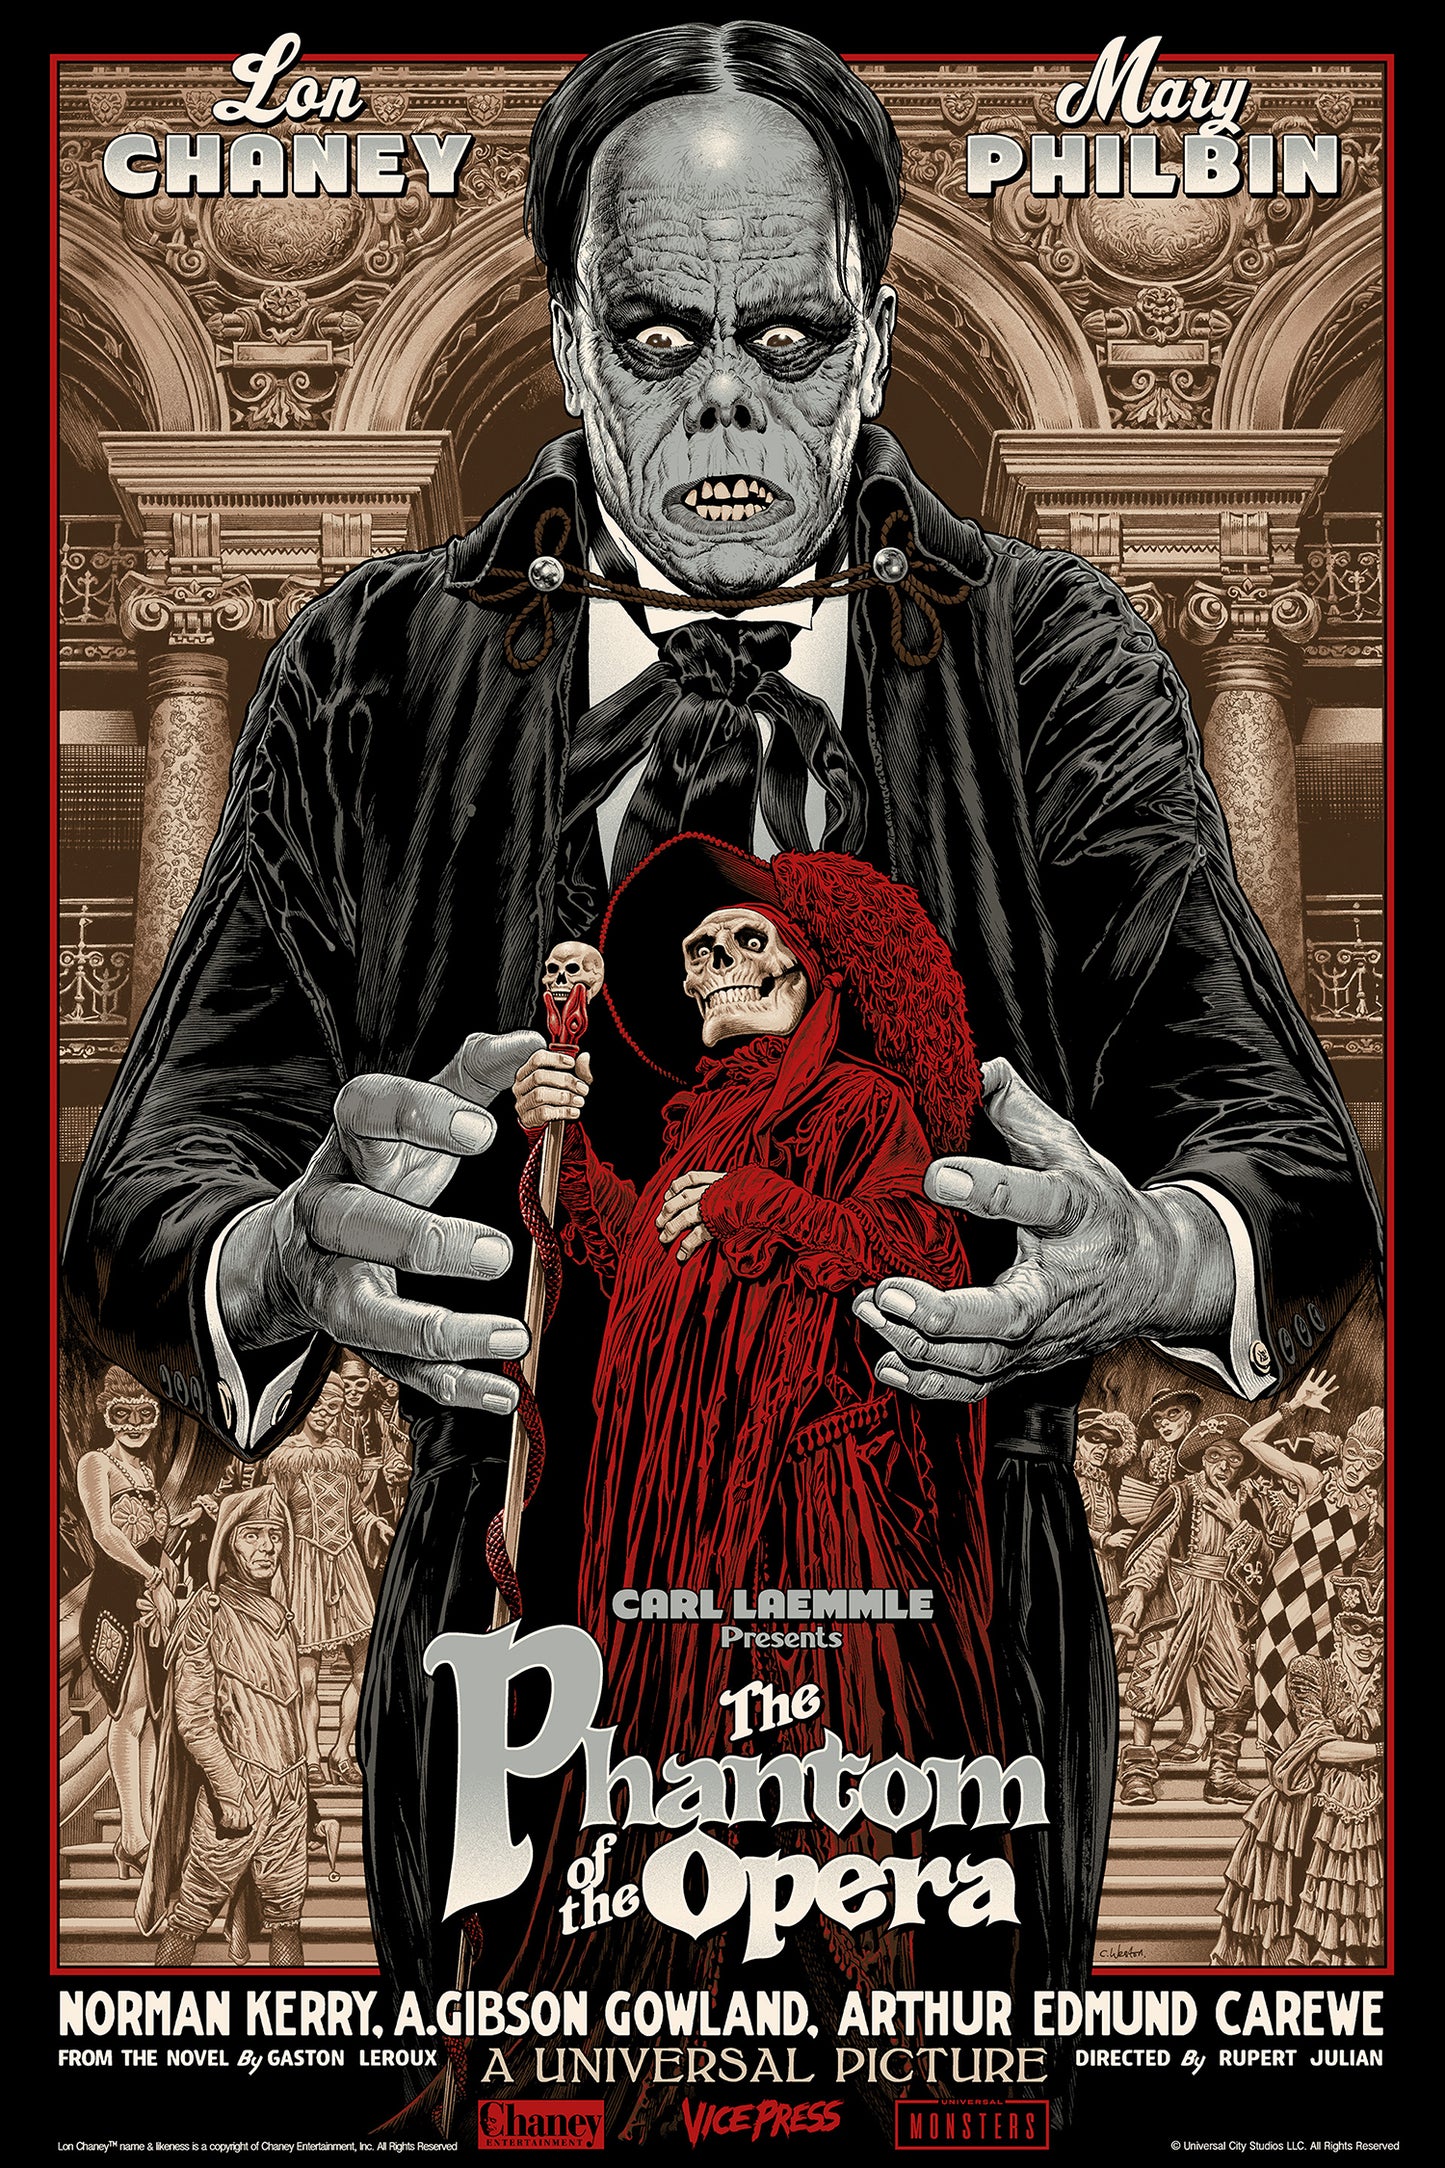 Chris Weston "The Phantom of the Opera"